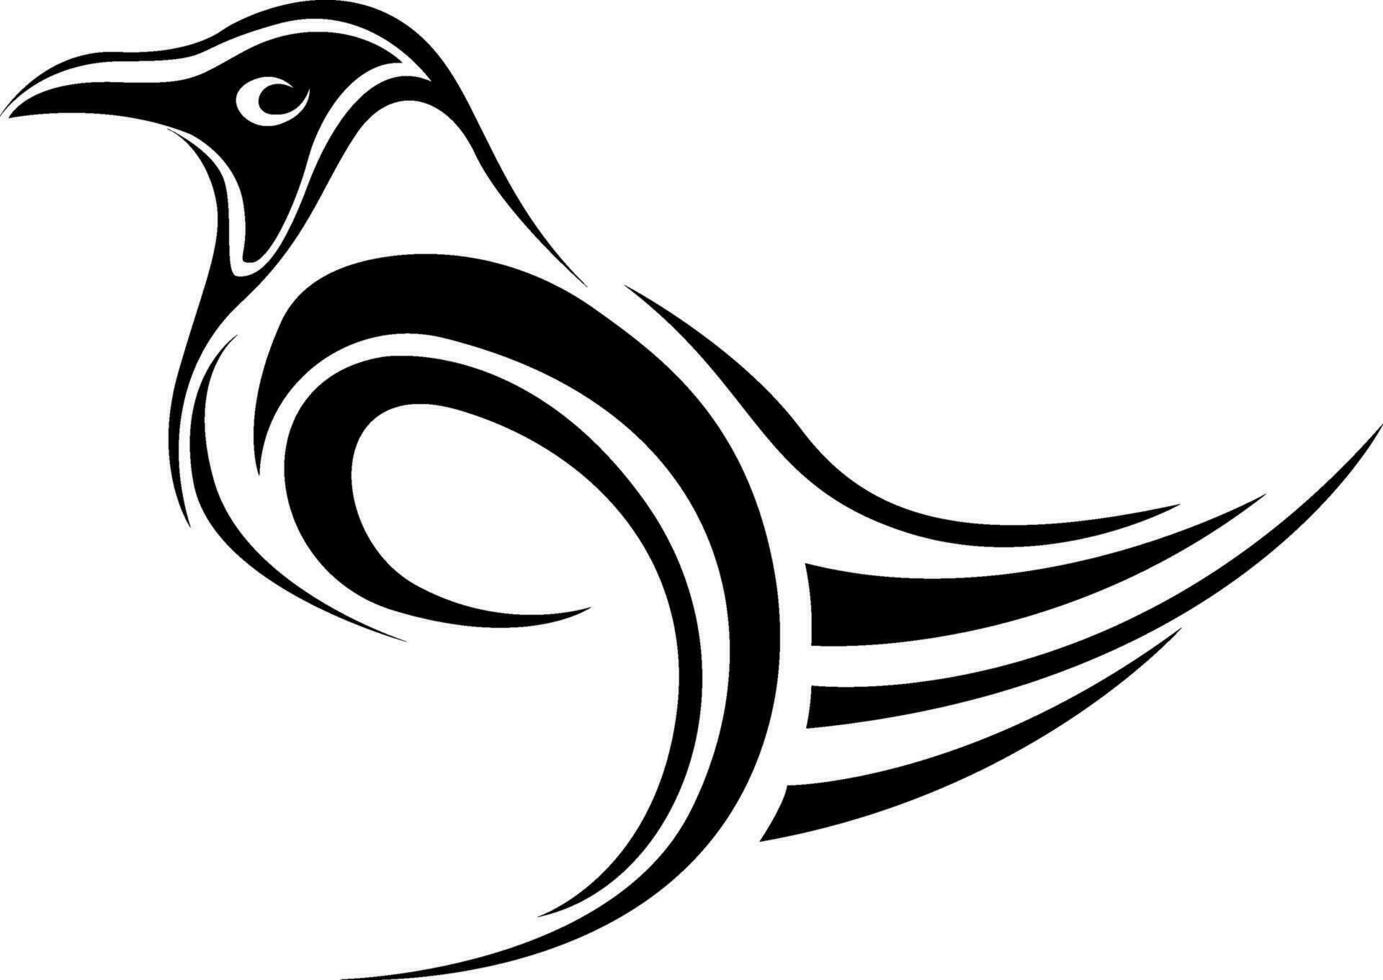 Crow bird tattoo, tattoo illustration, vector on a white background.